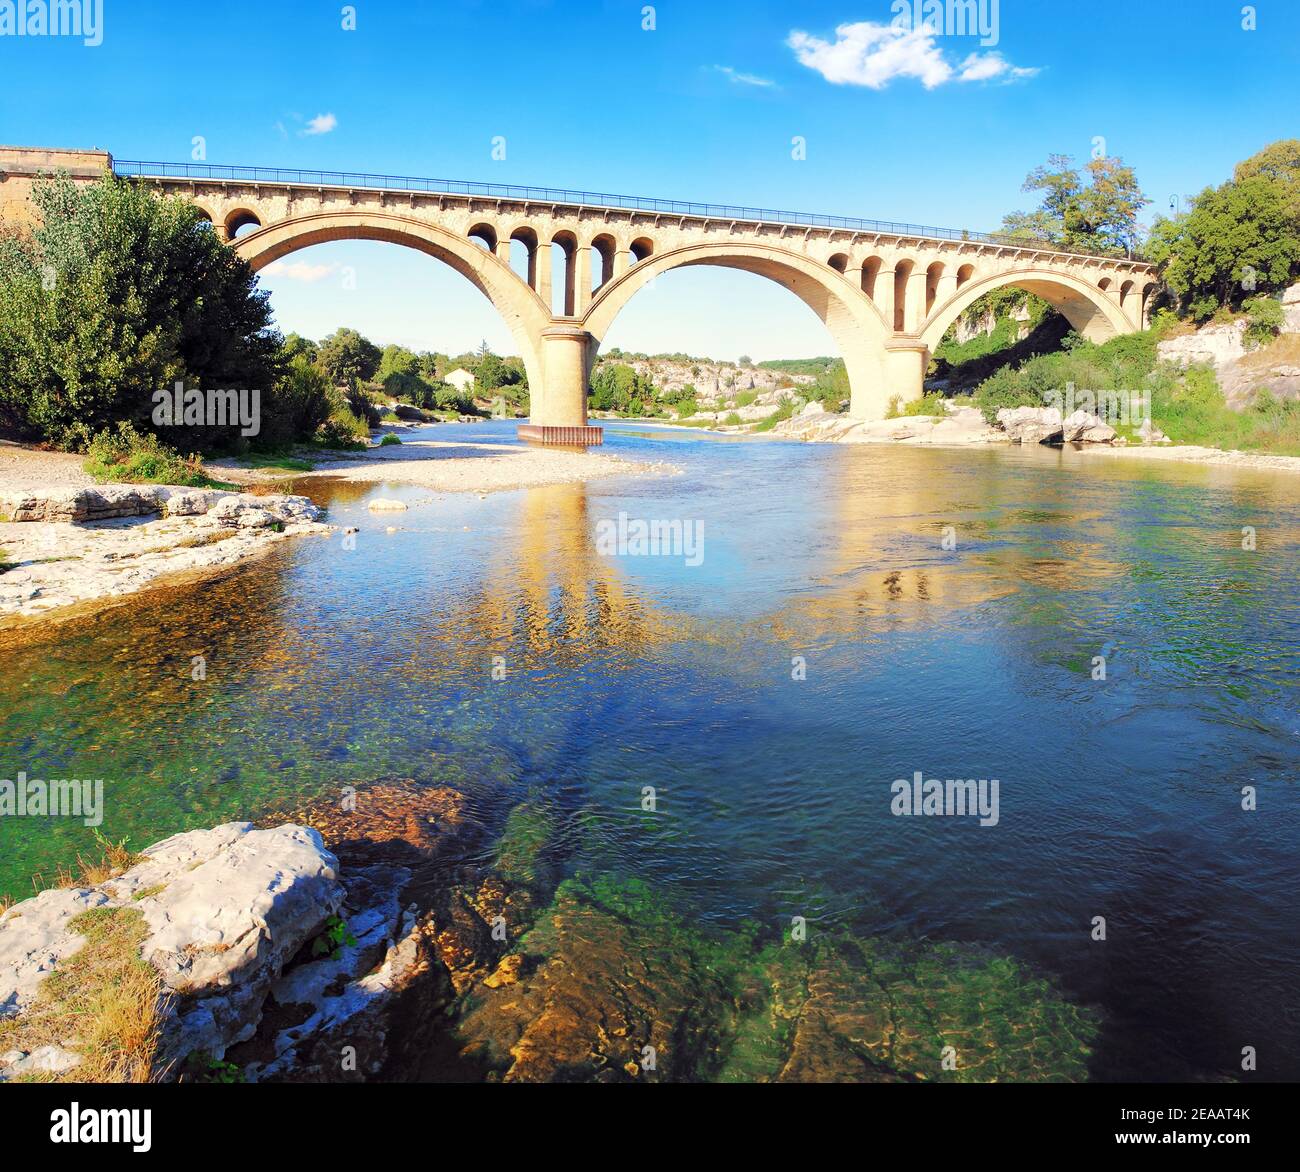 Architecture of the Collias bridge on the Gard river in Occitanie France. Stock Photo